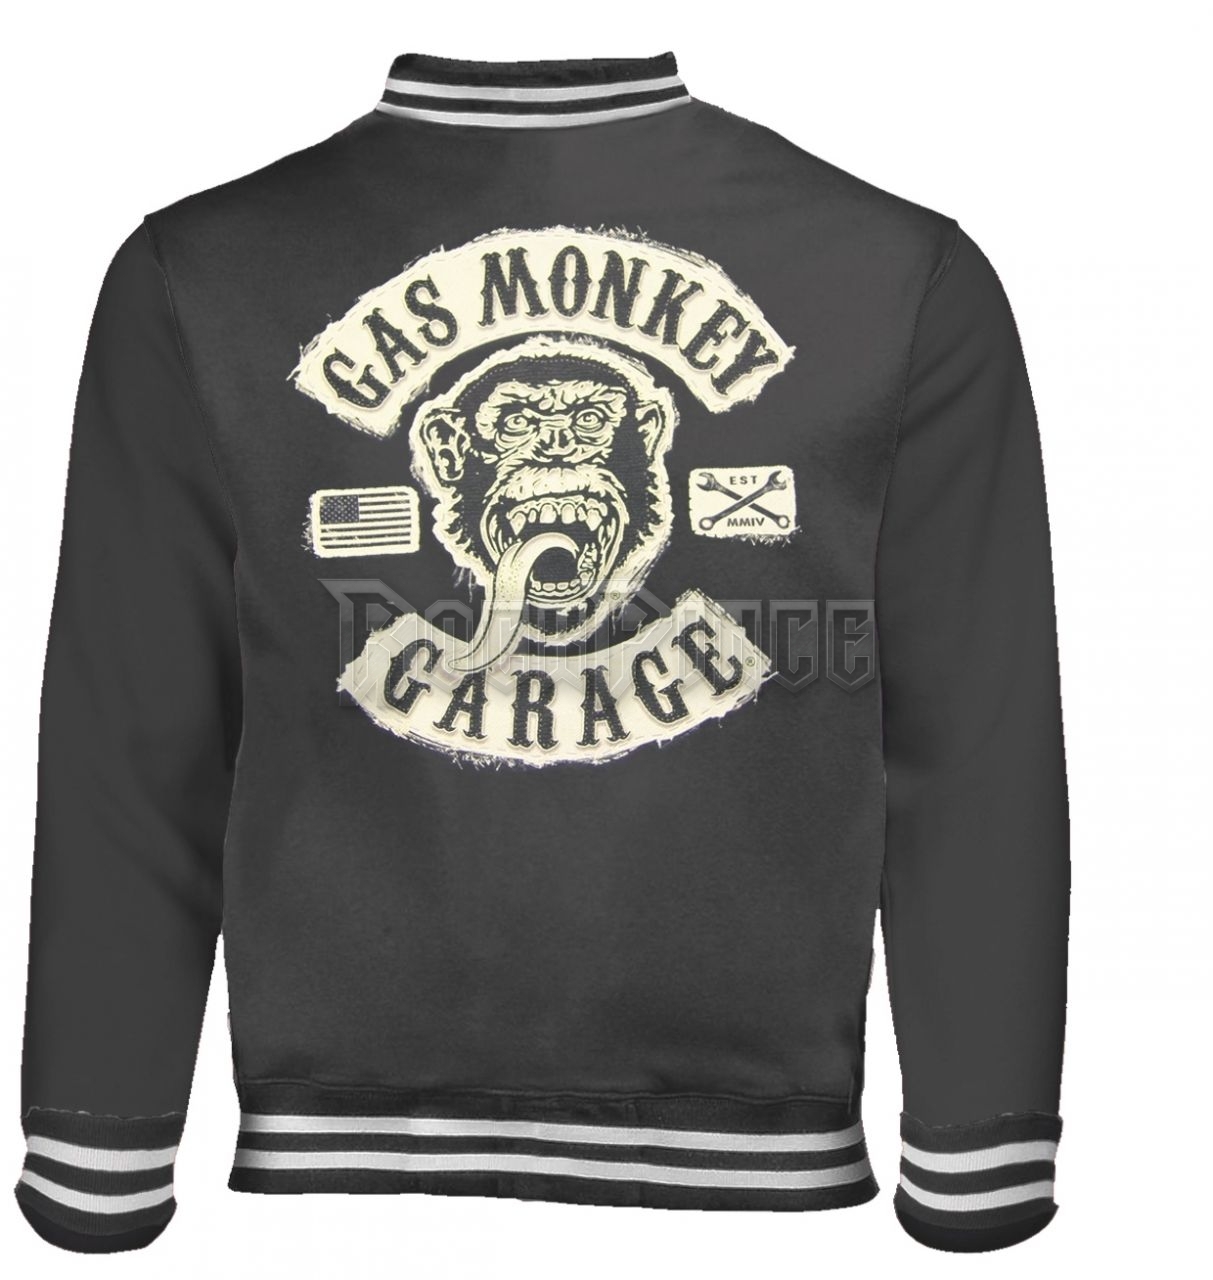 GAS MONKEY GARAGE - LOGO - Baseball Style Varsity Jacket - PHD10173BBSJ